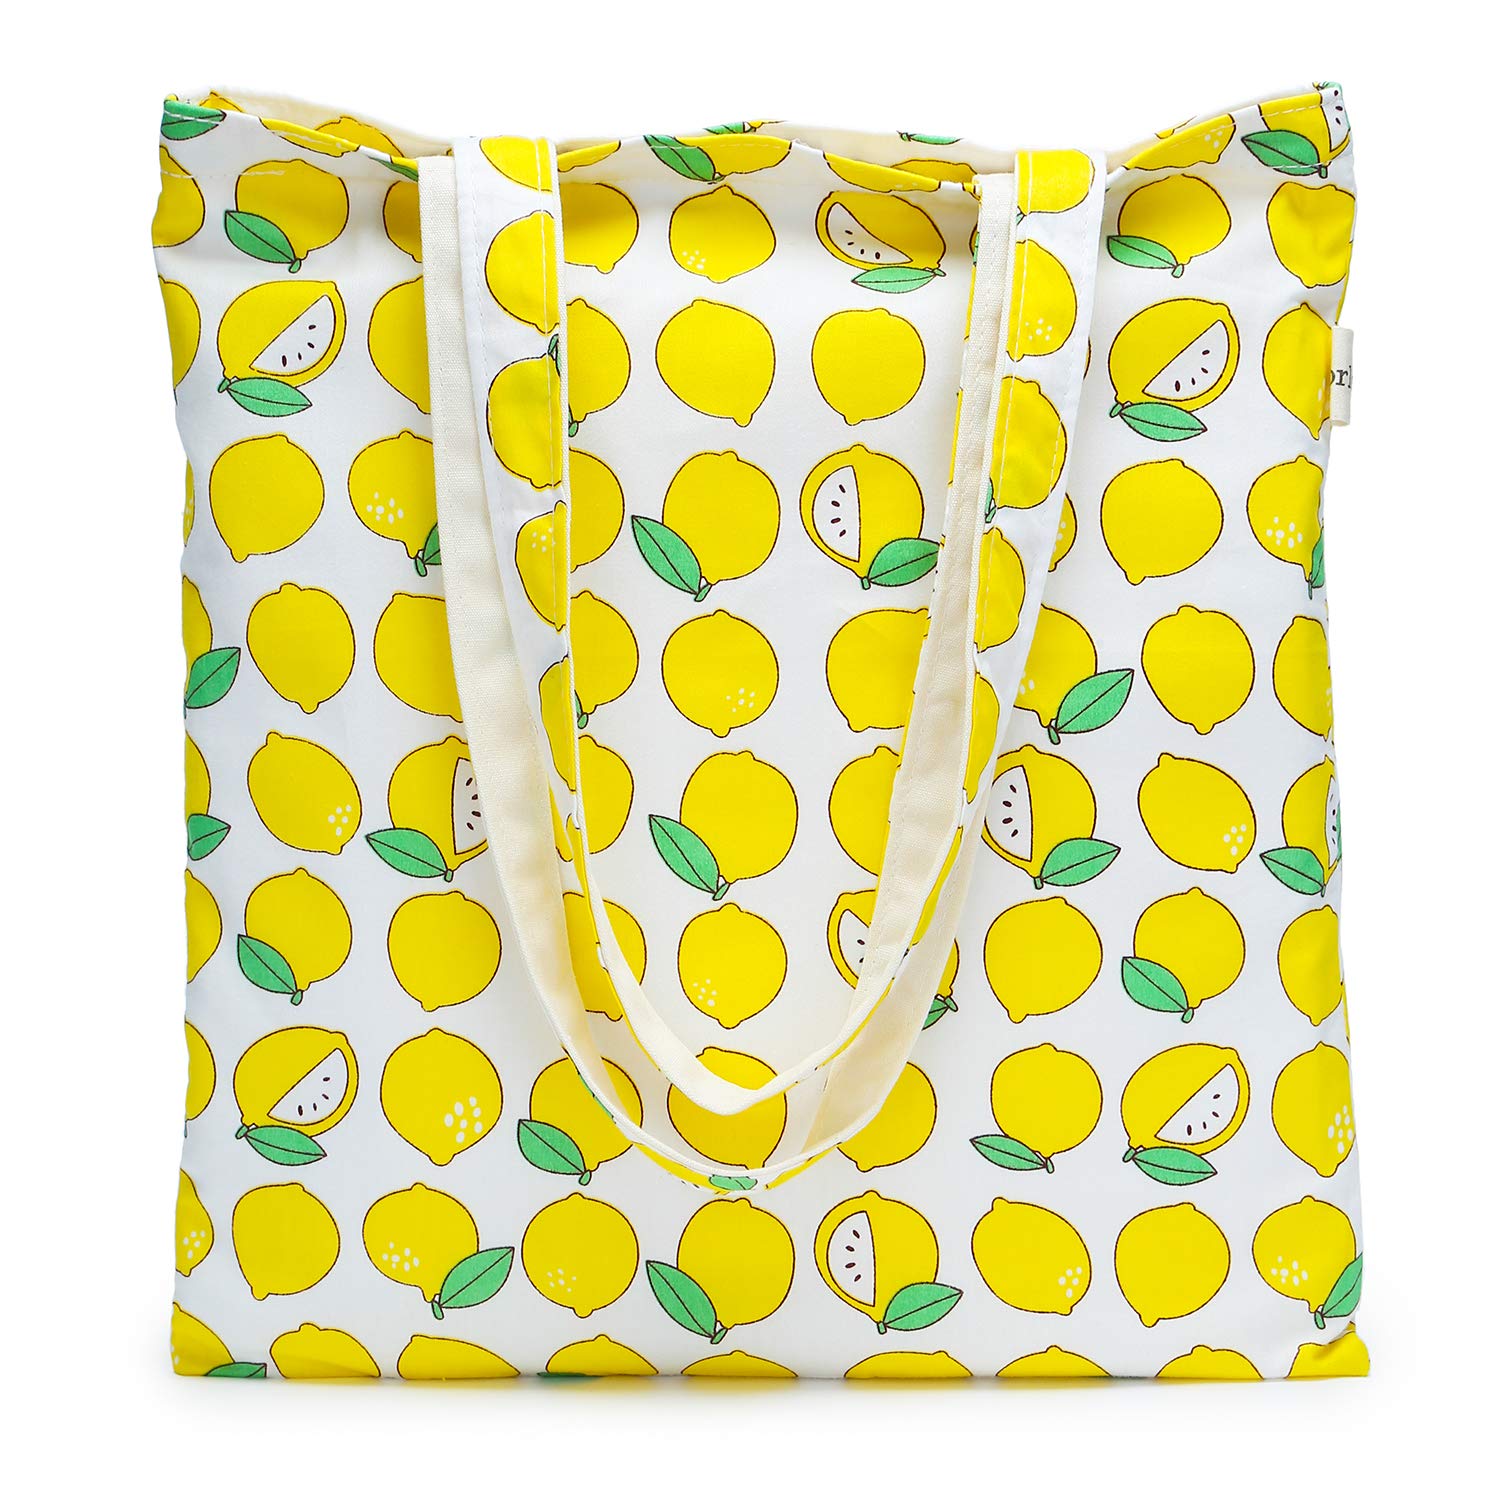 Gorlos + Canvas Tote Bag, Lemon